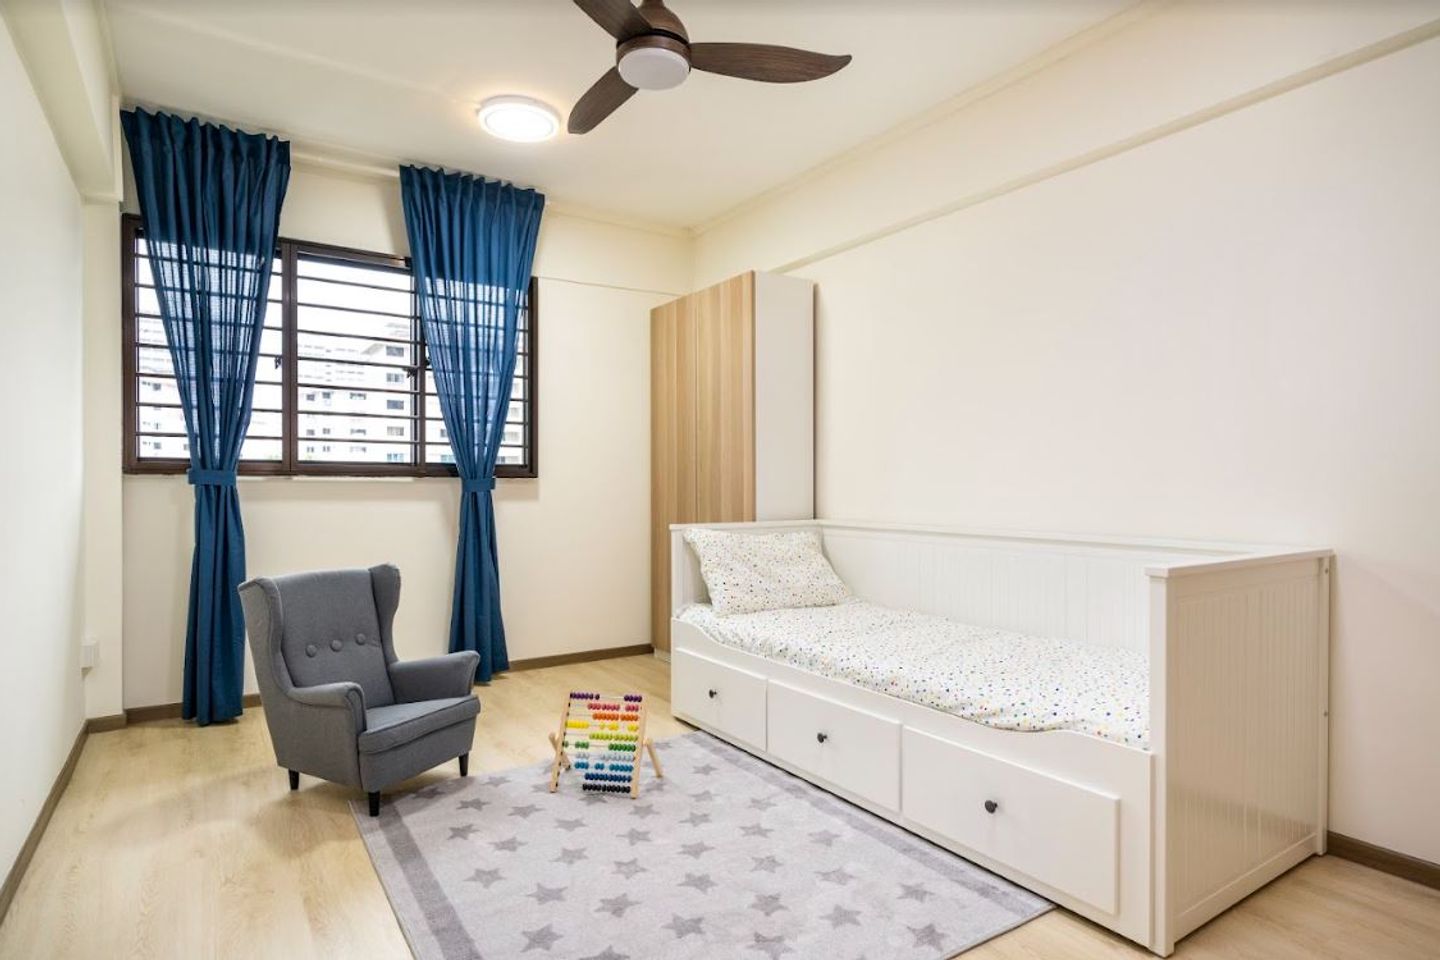 Minimal Bedroom For Condo - Livspace